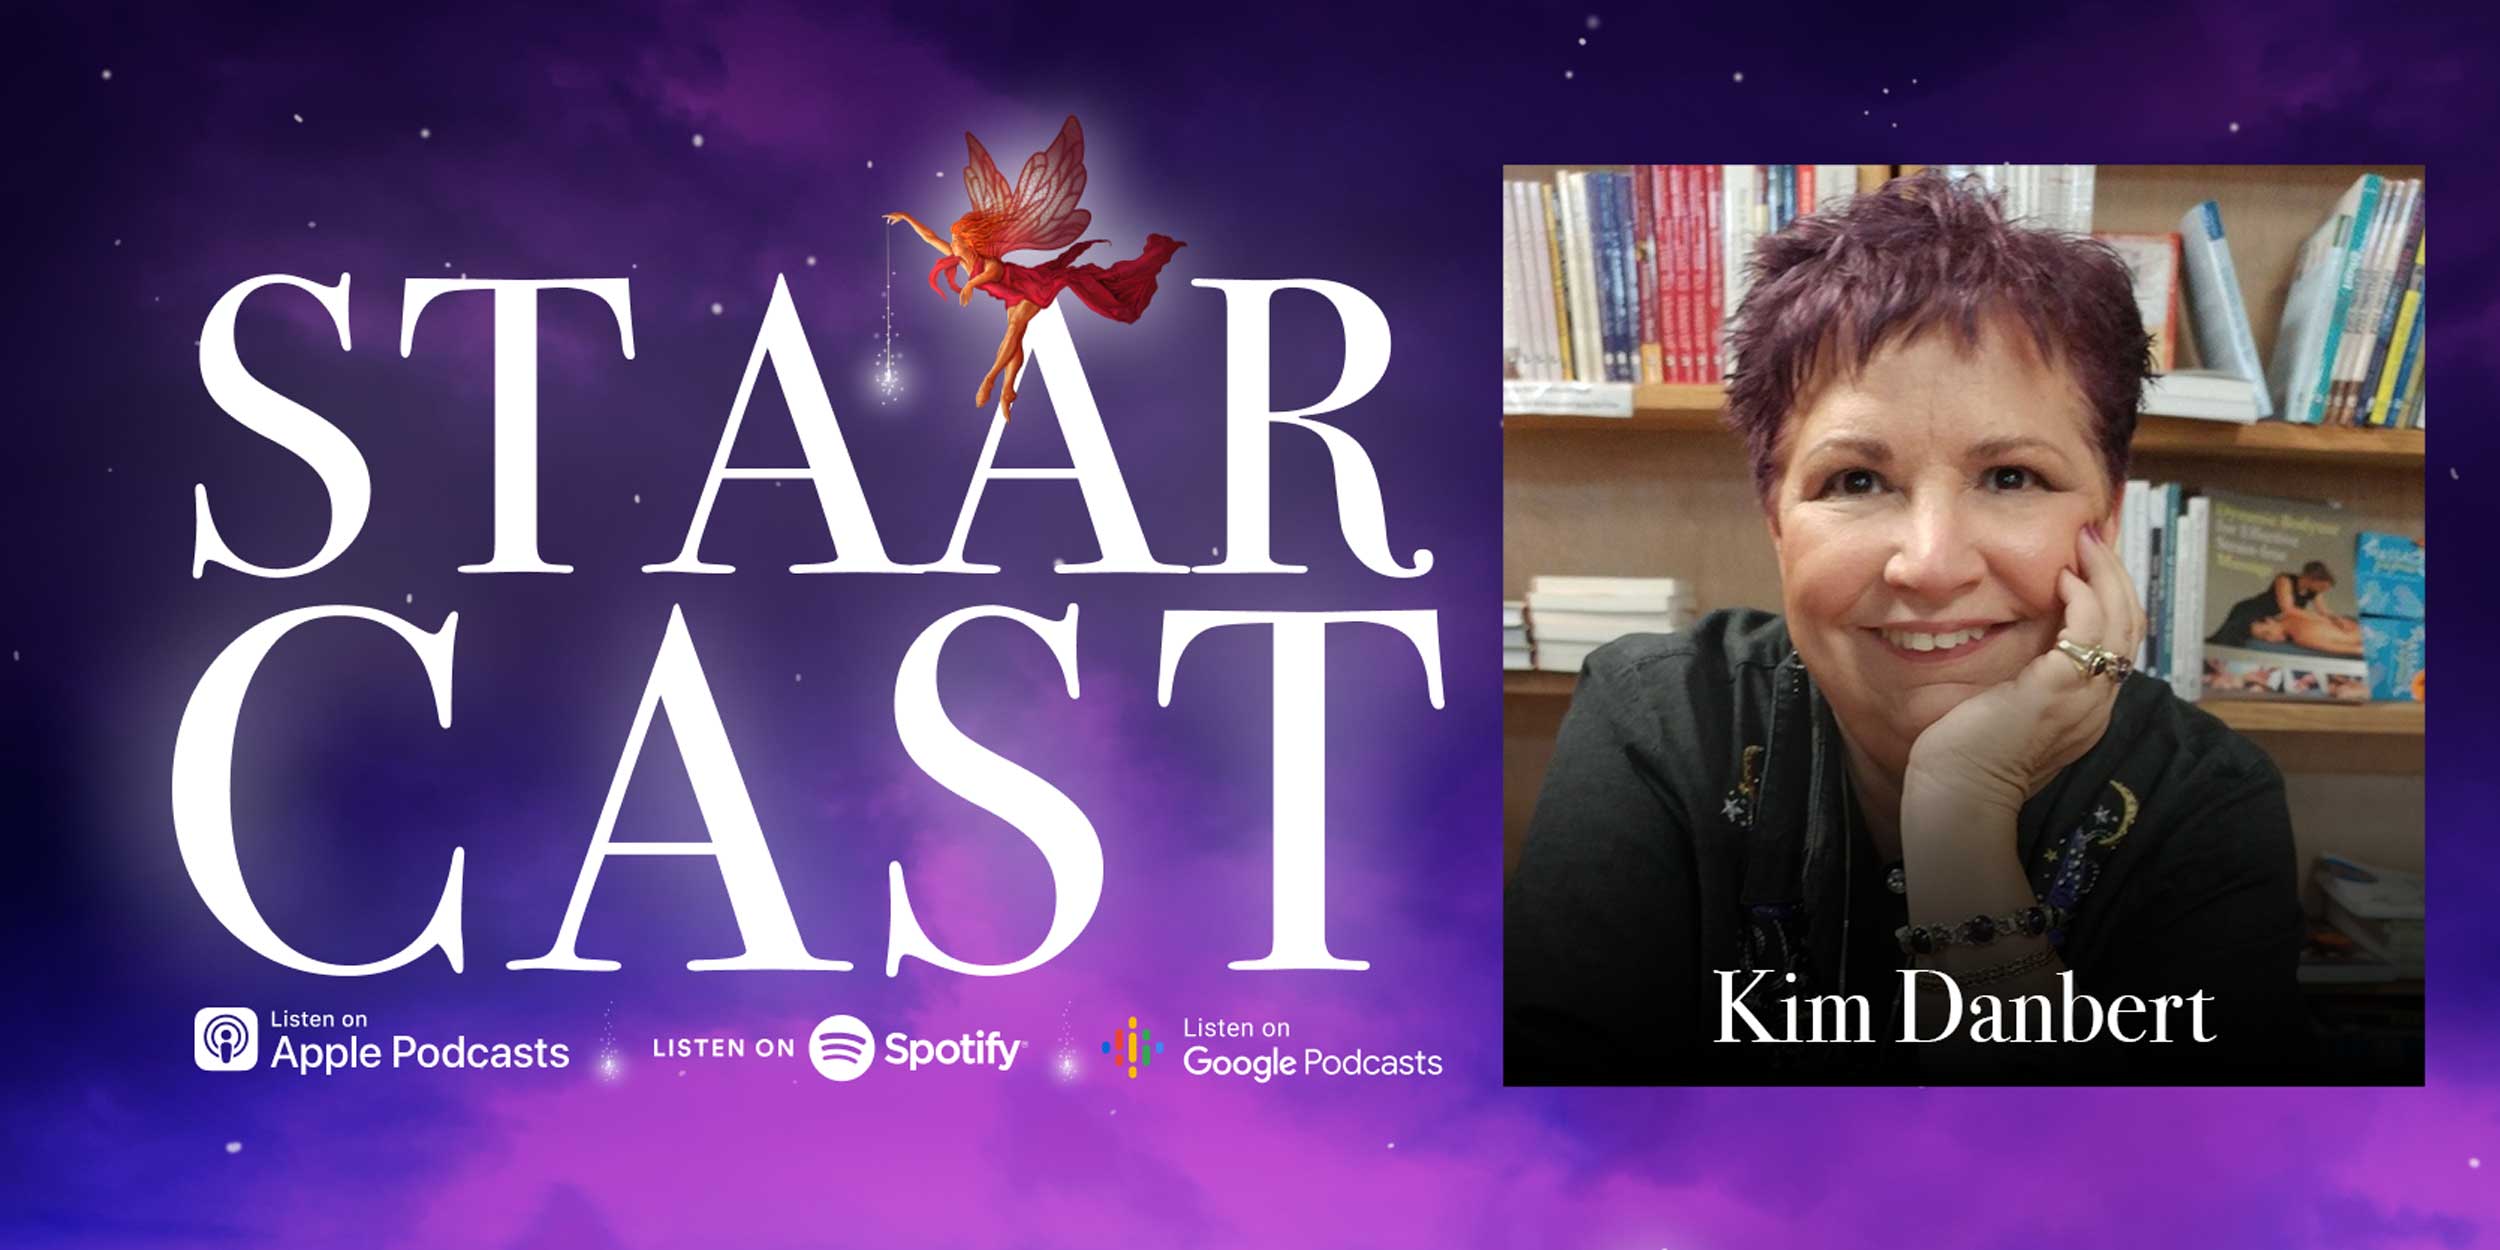 StaarCast banner featuring Kim Danbert